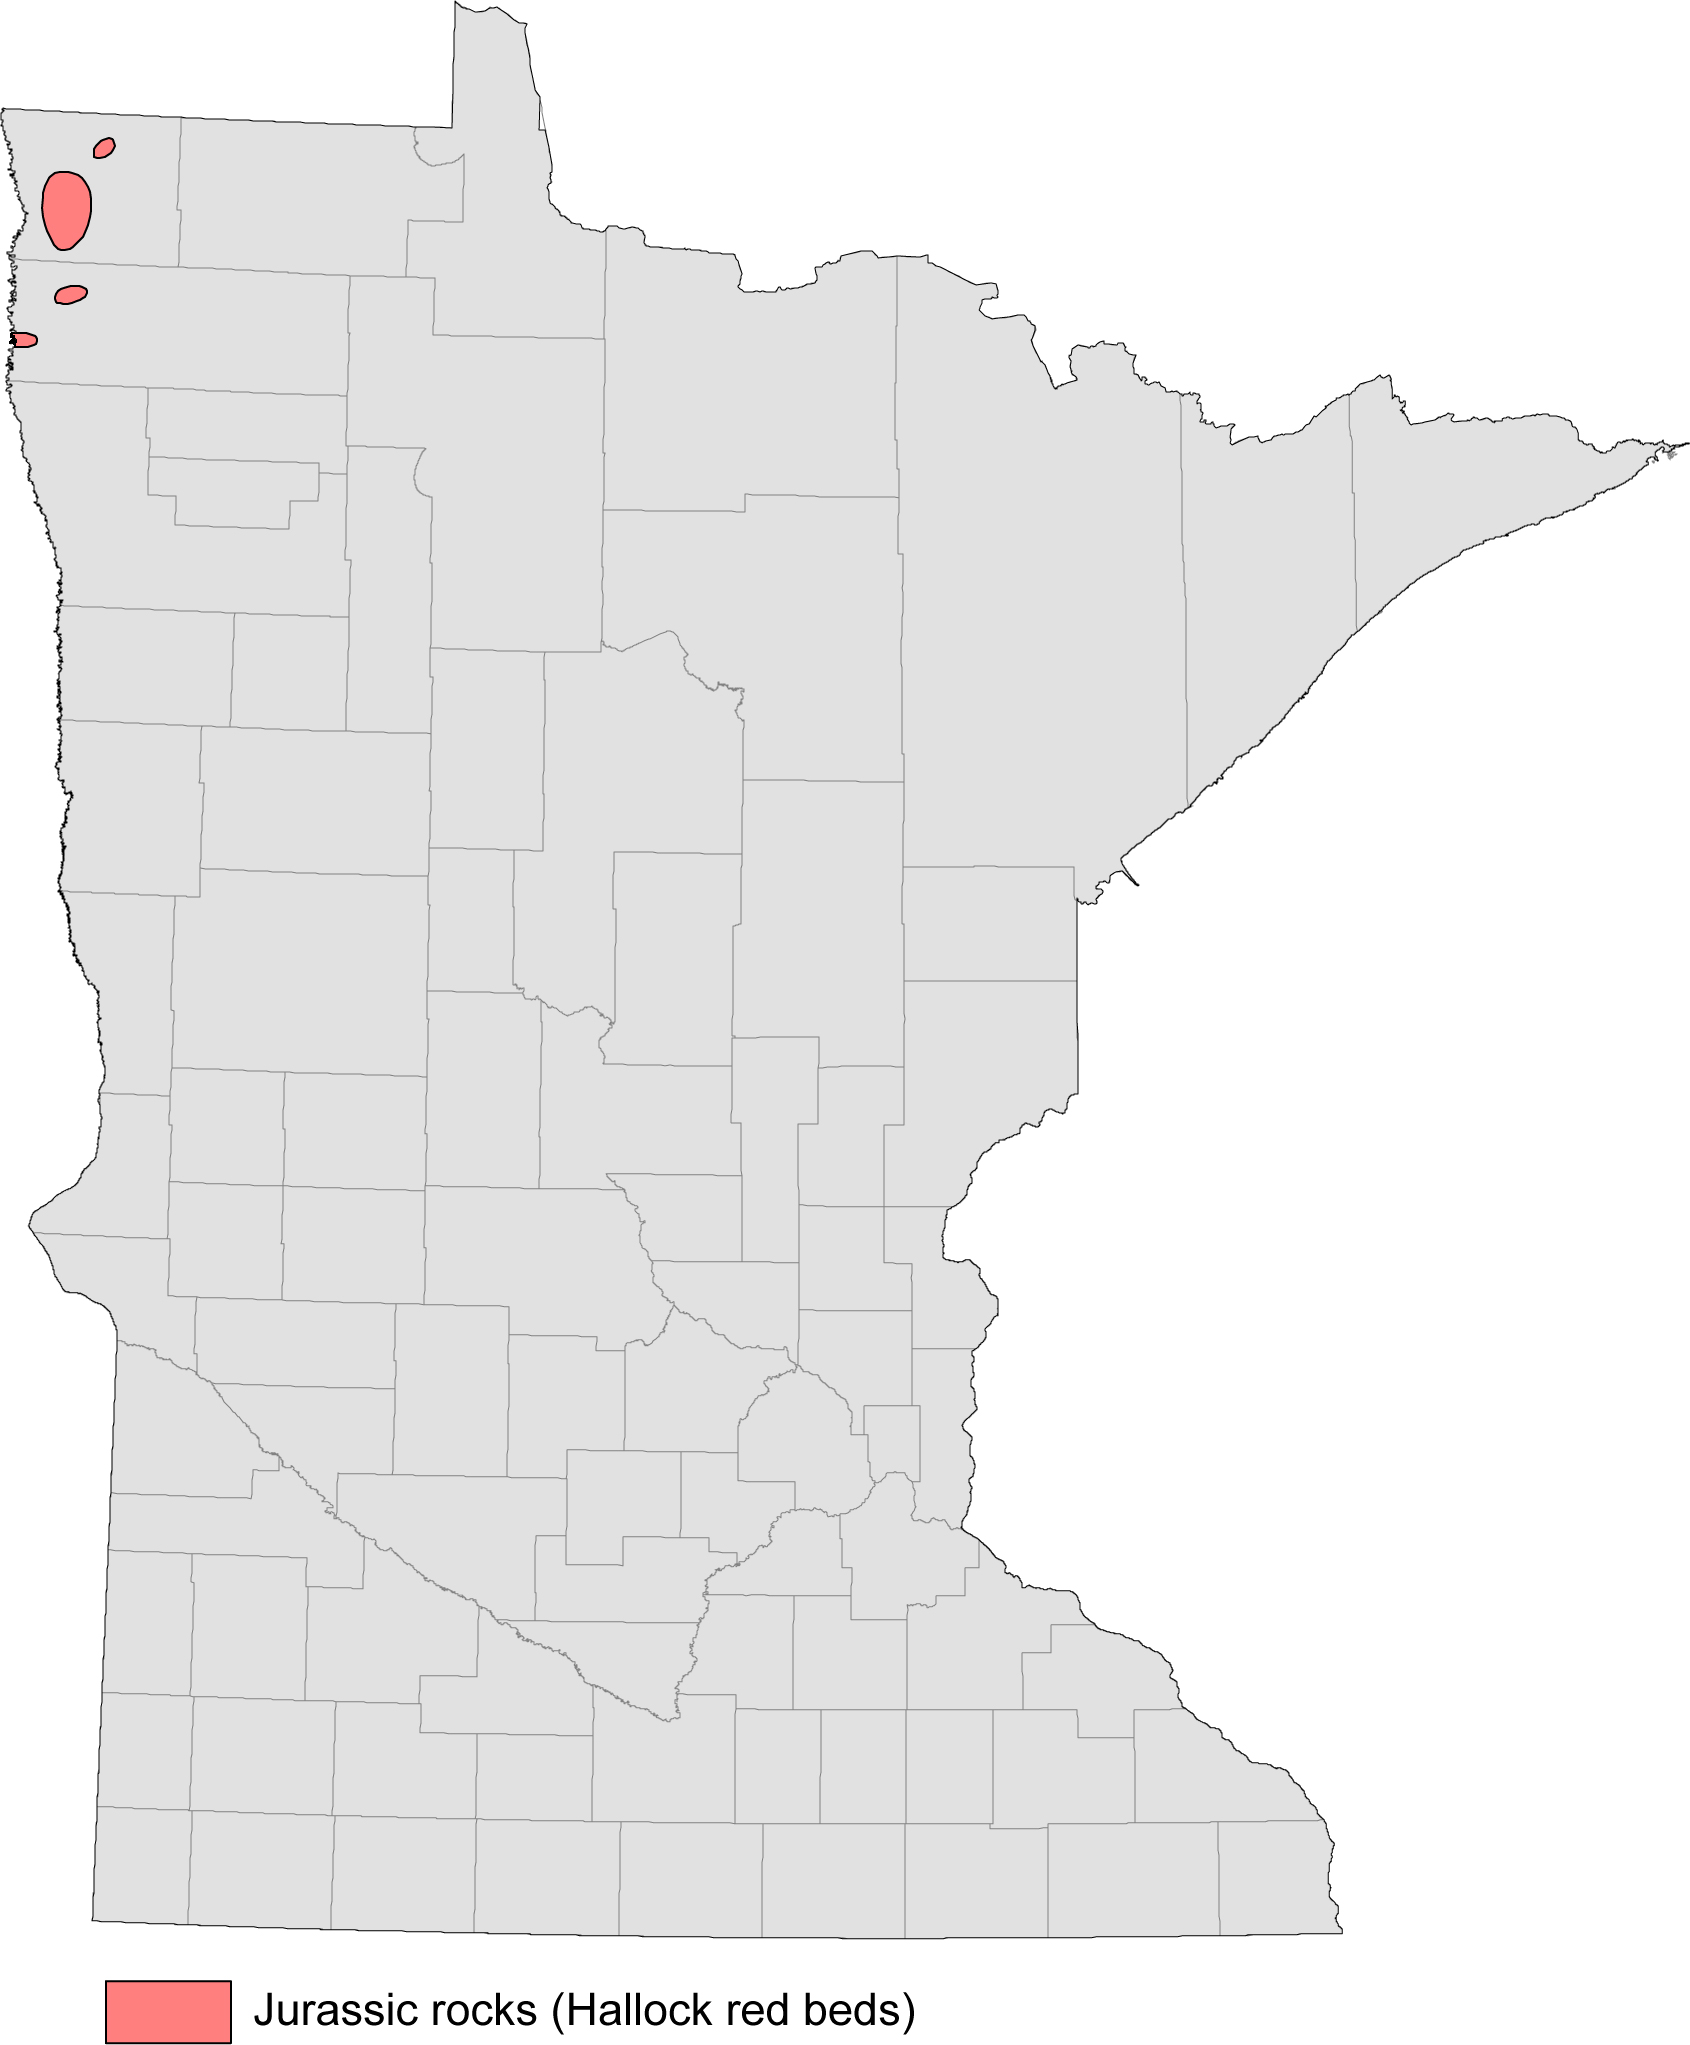 Distribution of Jurassic rocks in Minnesota.